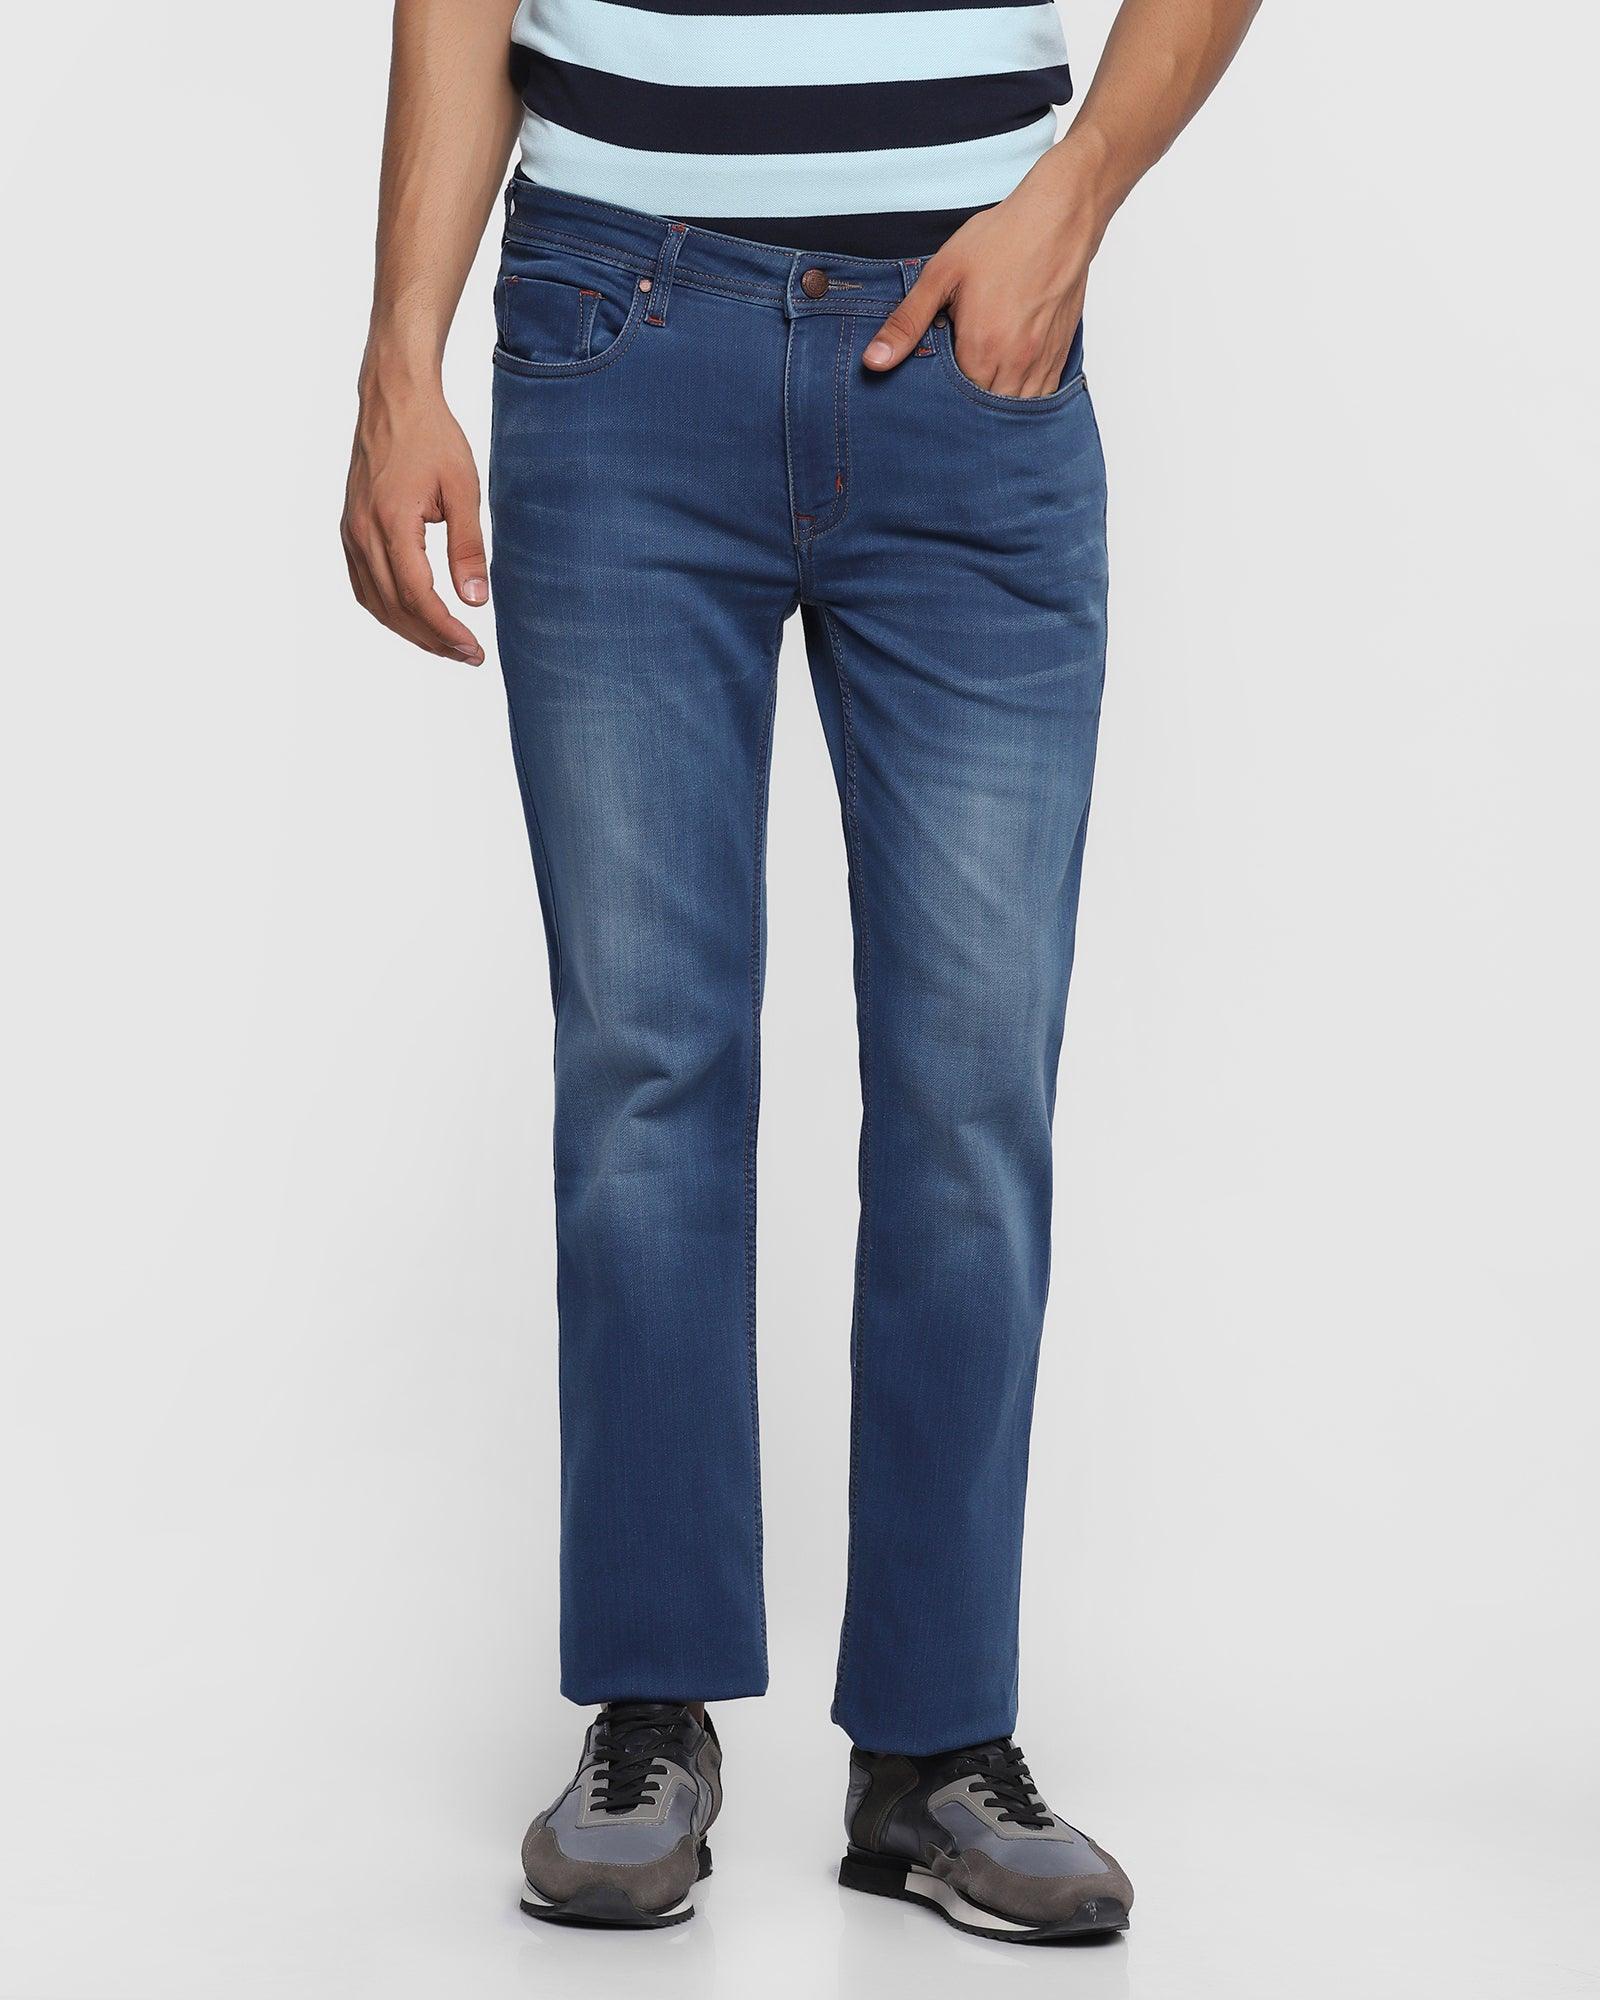 super clean straight comfort duke fit indigo jeans - gerd